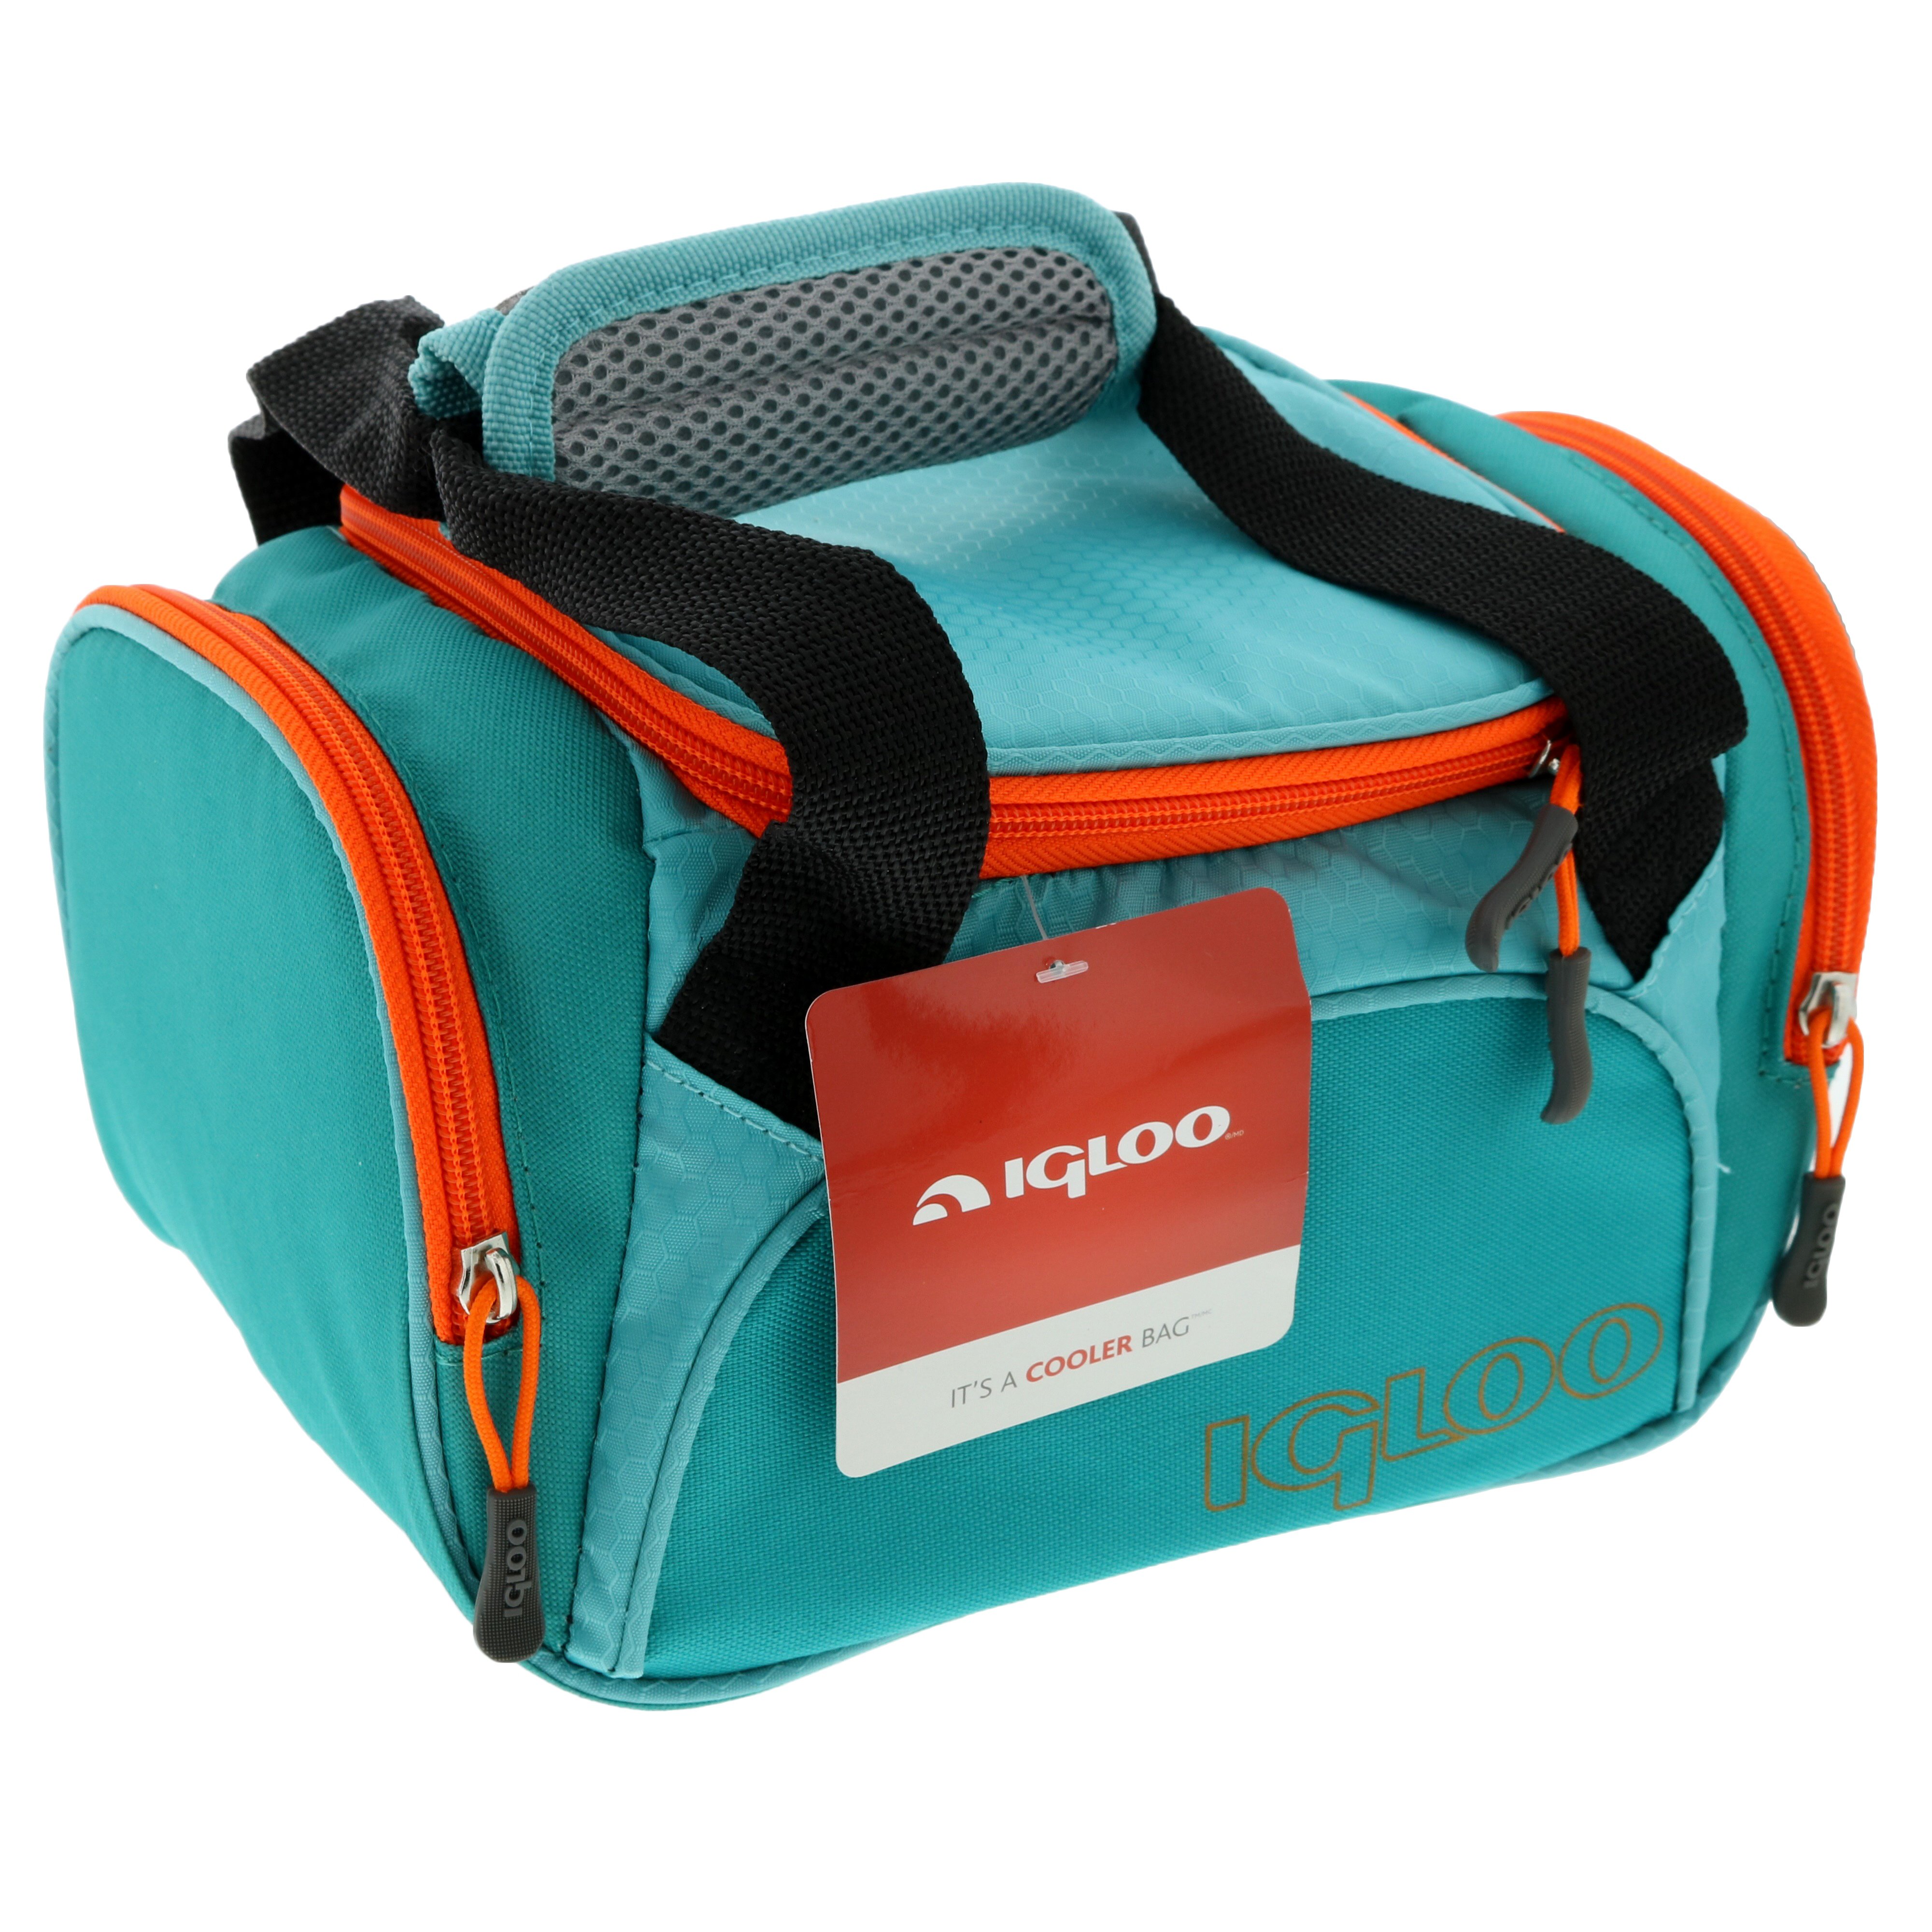 Igloo Small Duffel Cooler Bag, Assorted Colors - Shop Coolers